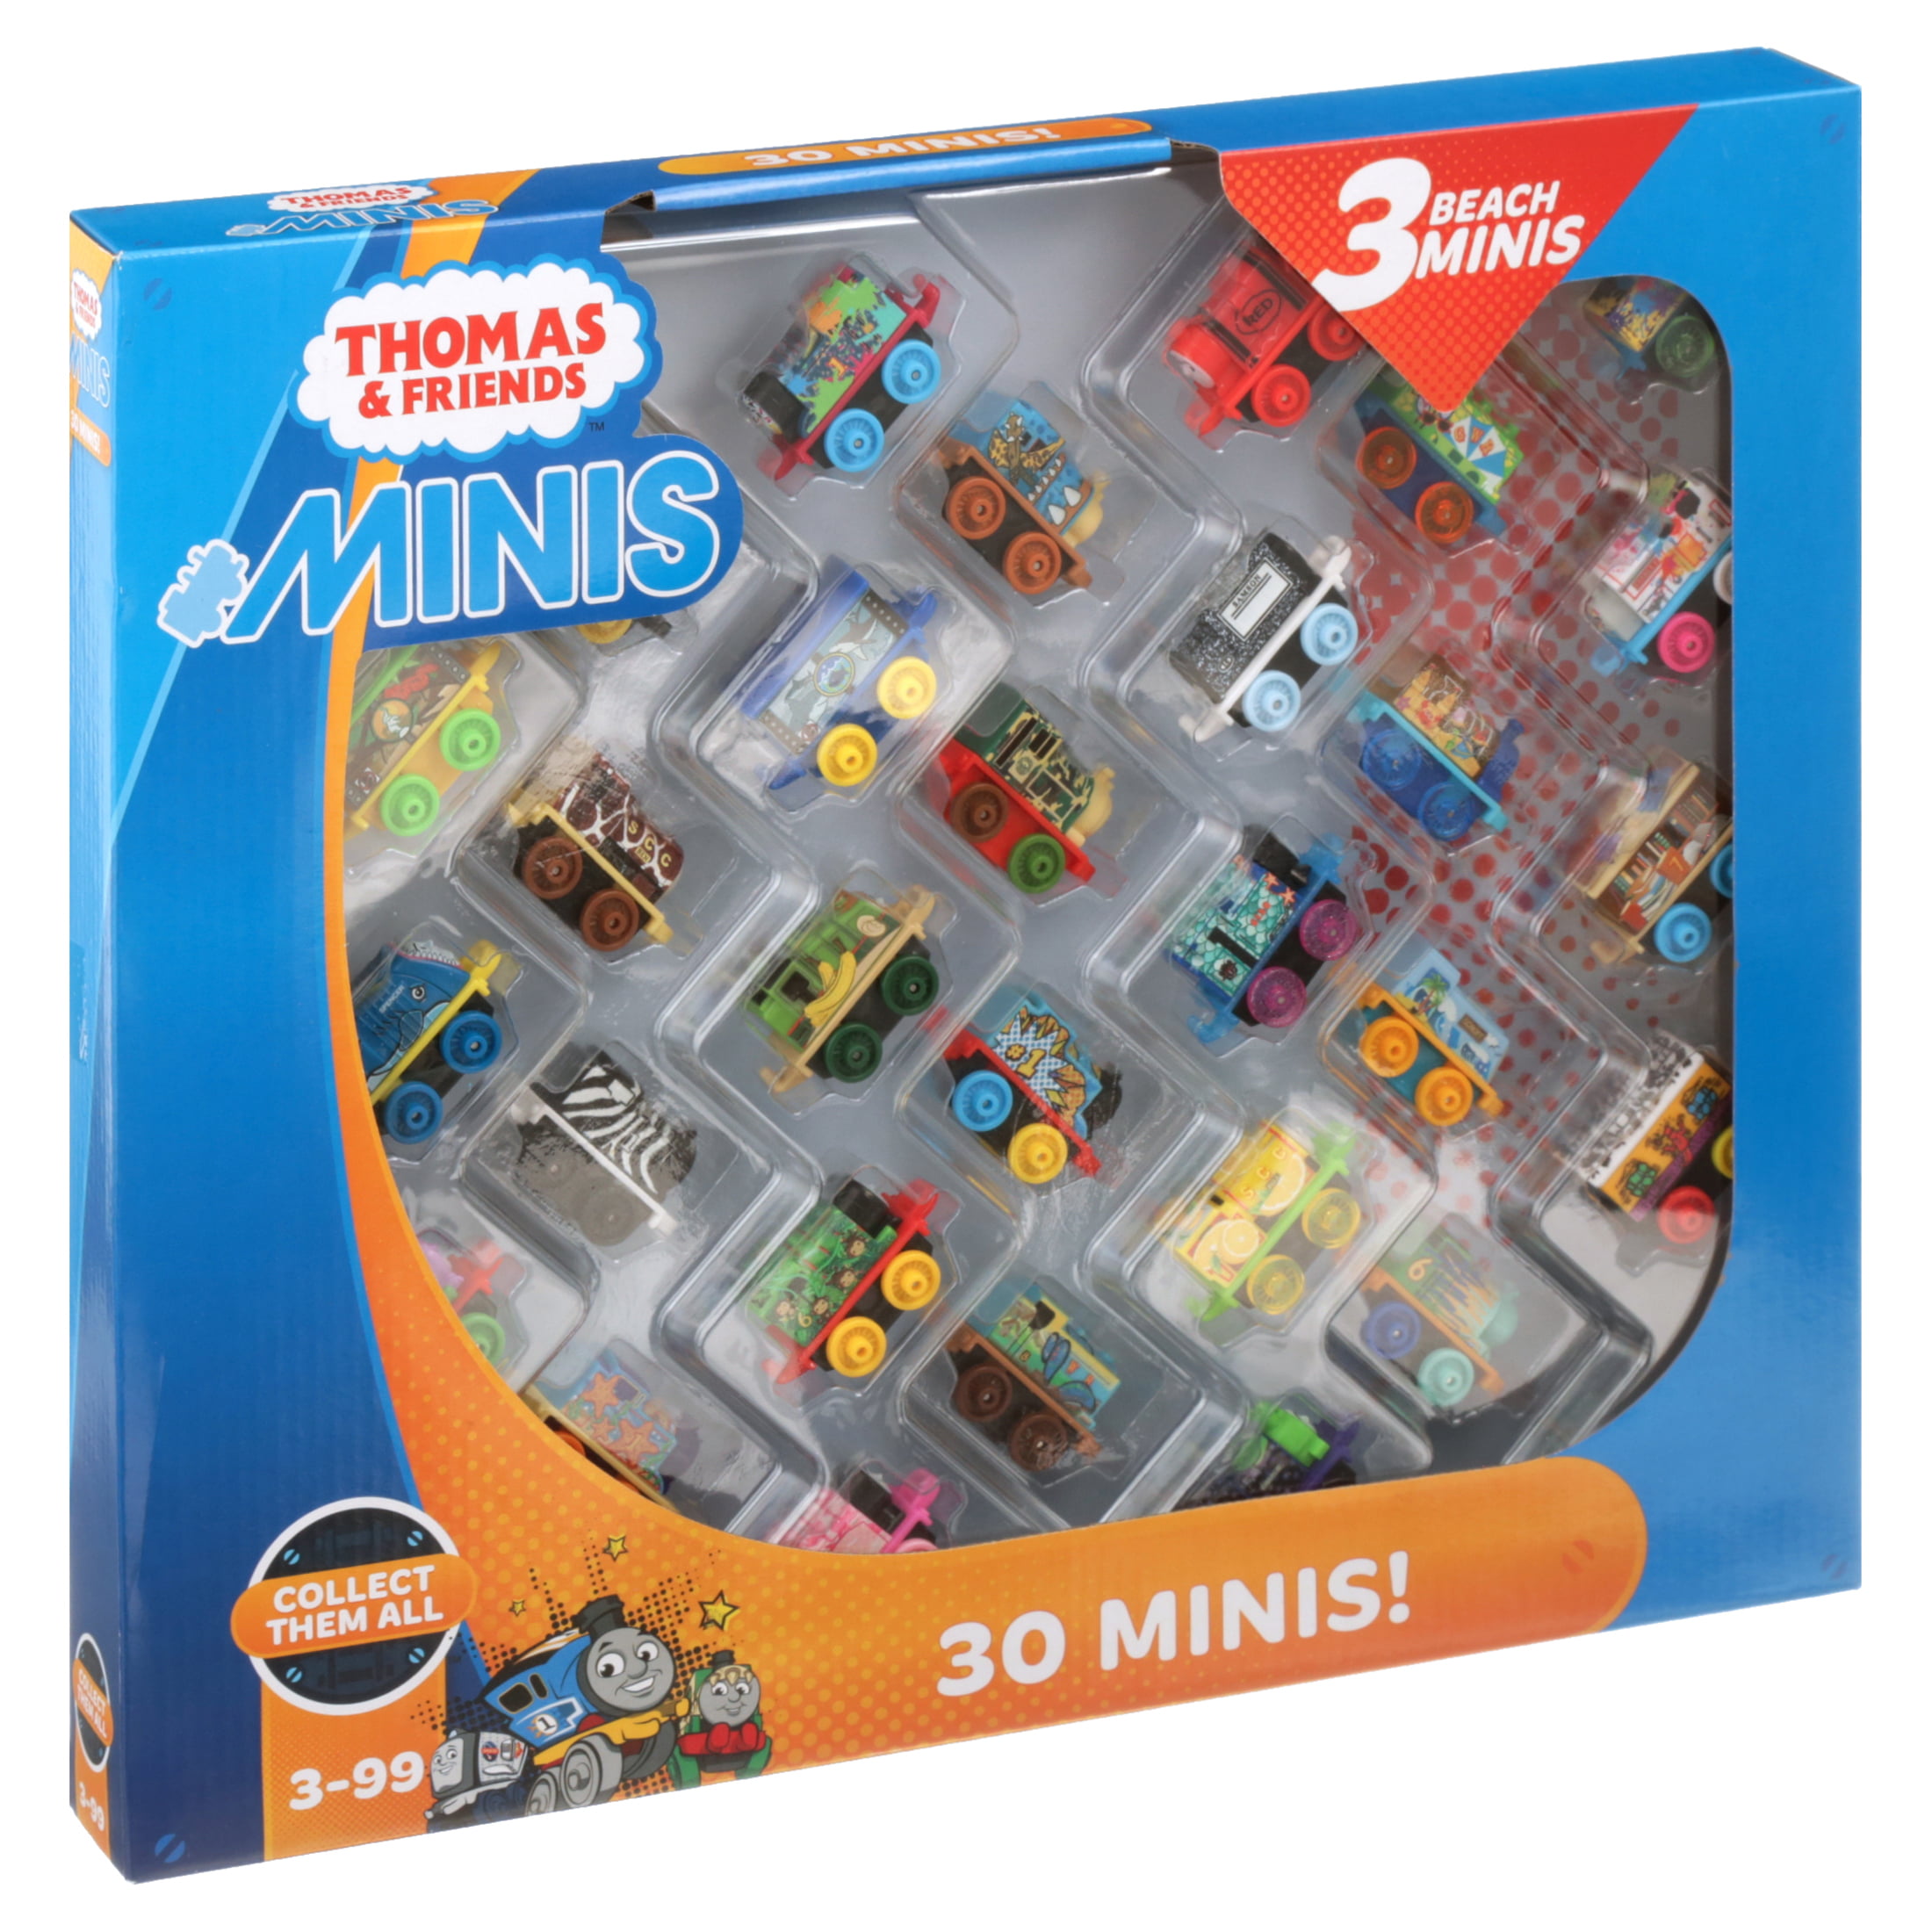 Thomas & Friends MINIS 30-Pack 